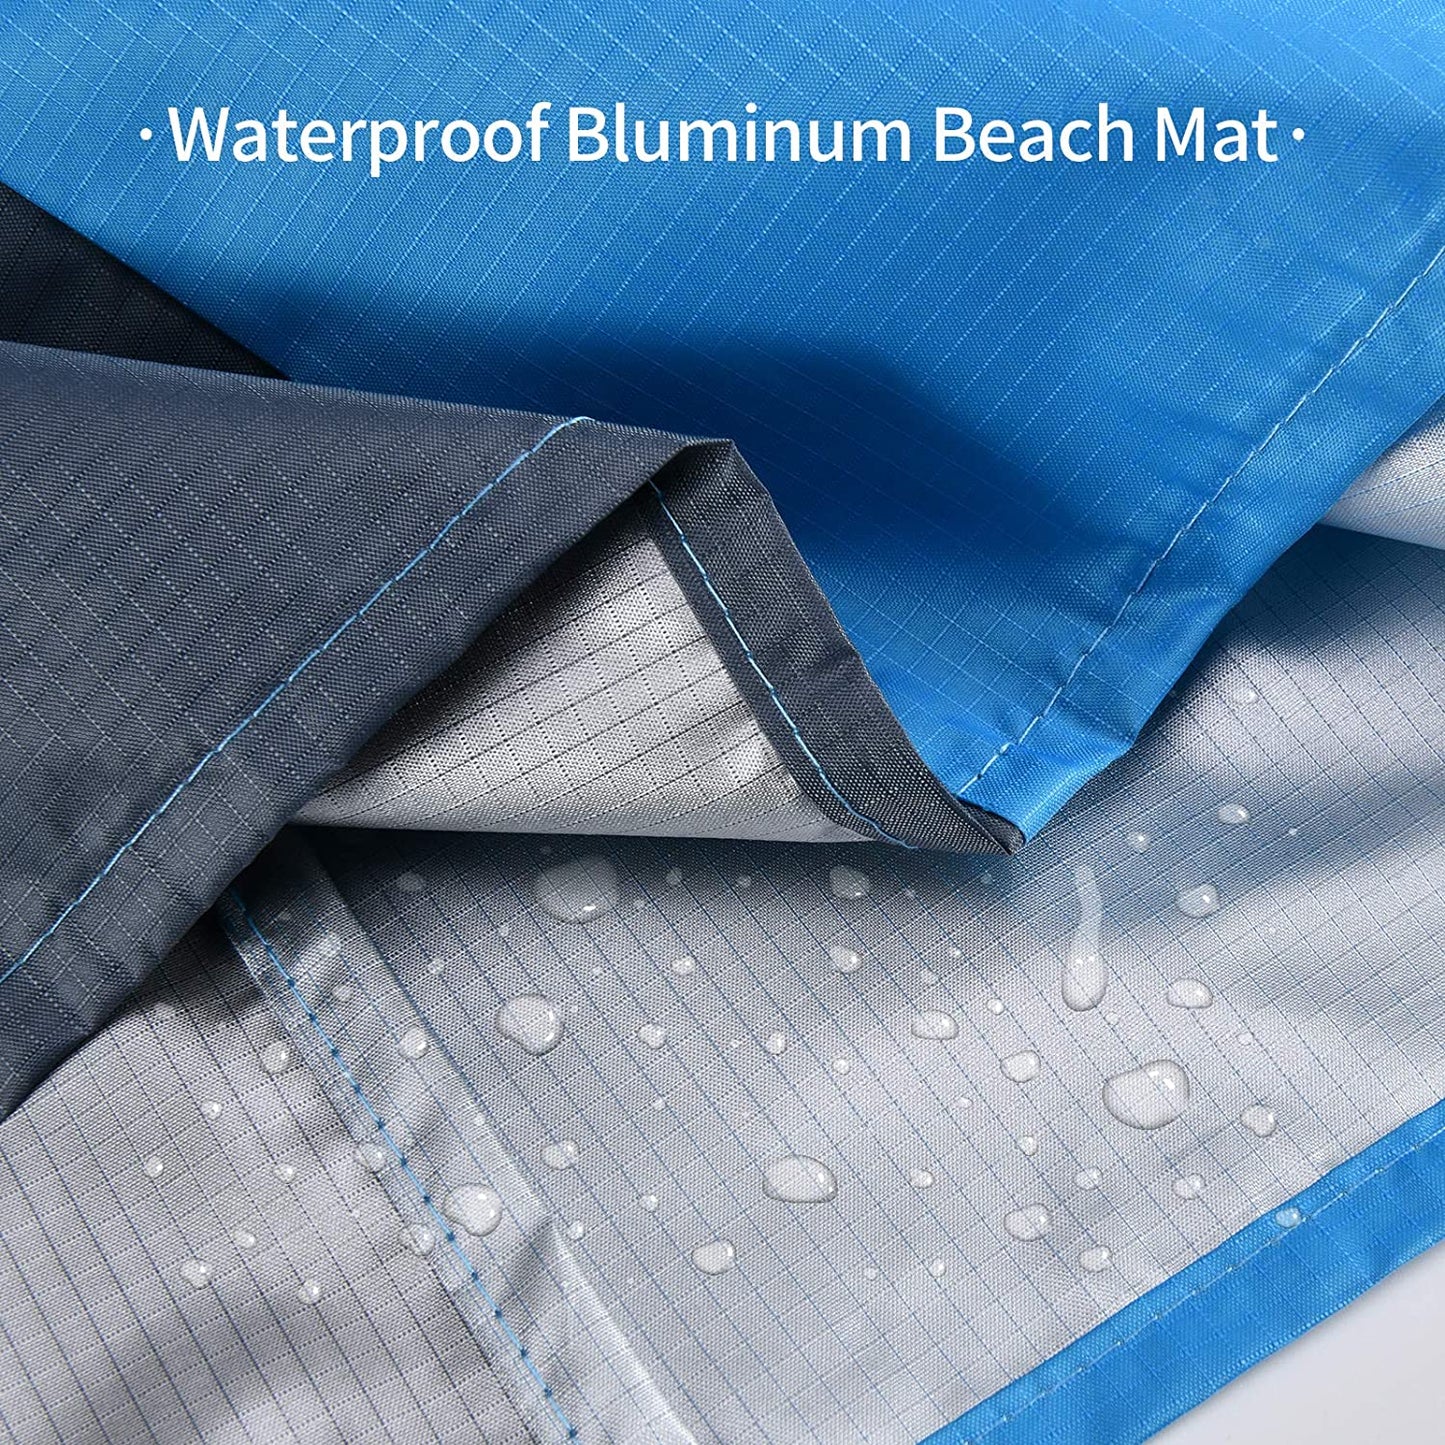 Waterproof Pocket Beach Blanket Folding Camping Mat